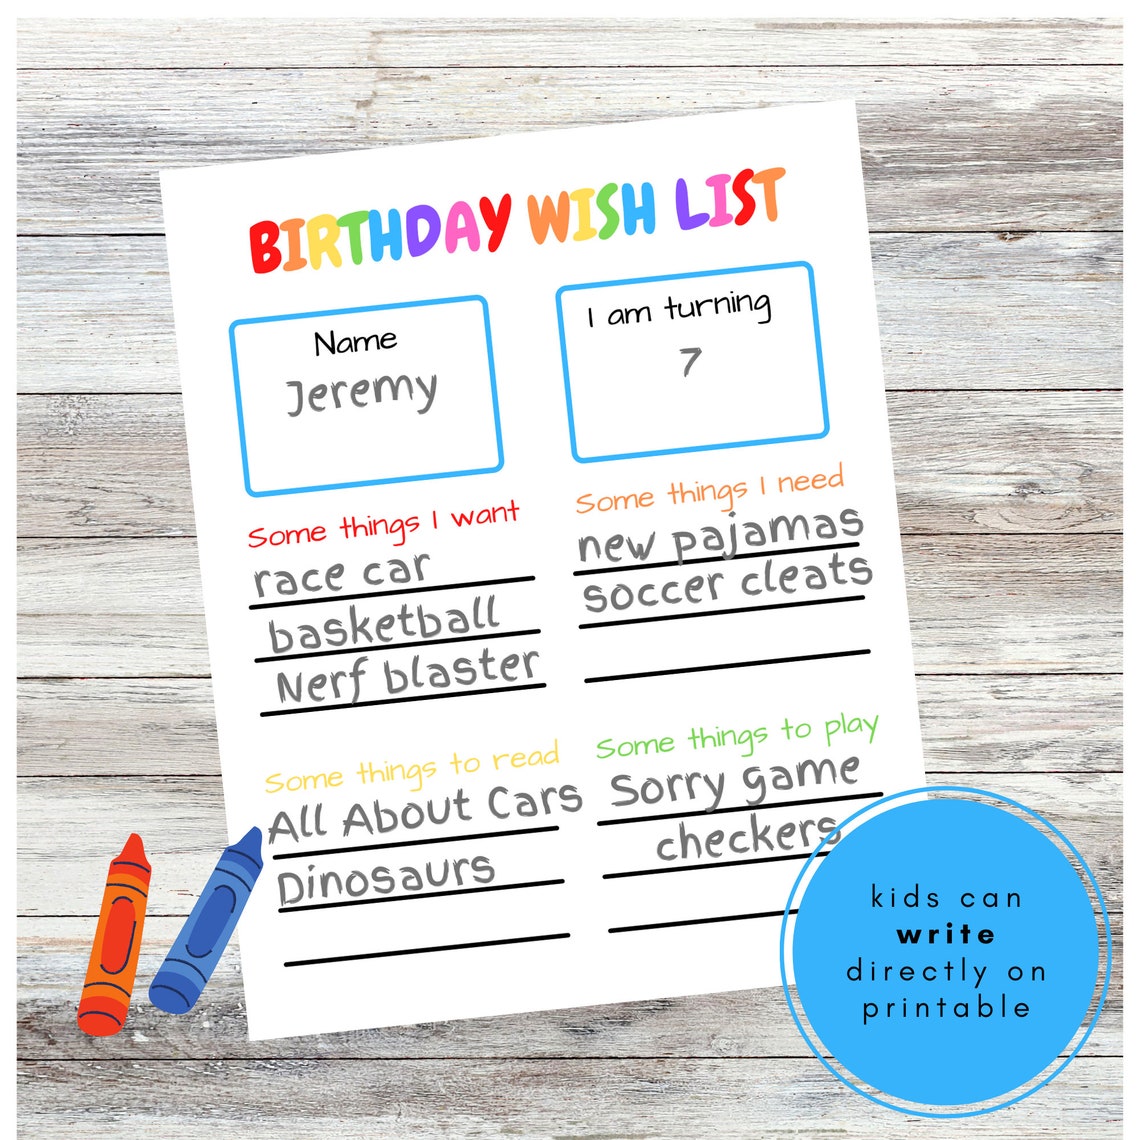 birthday-wish-list-kids-birthday-list-birthday-wants-gifts-etsy-espa-a